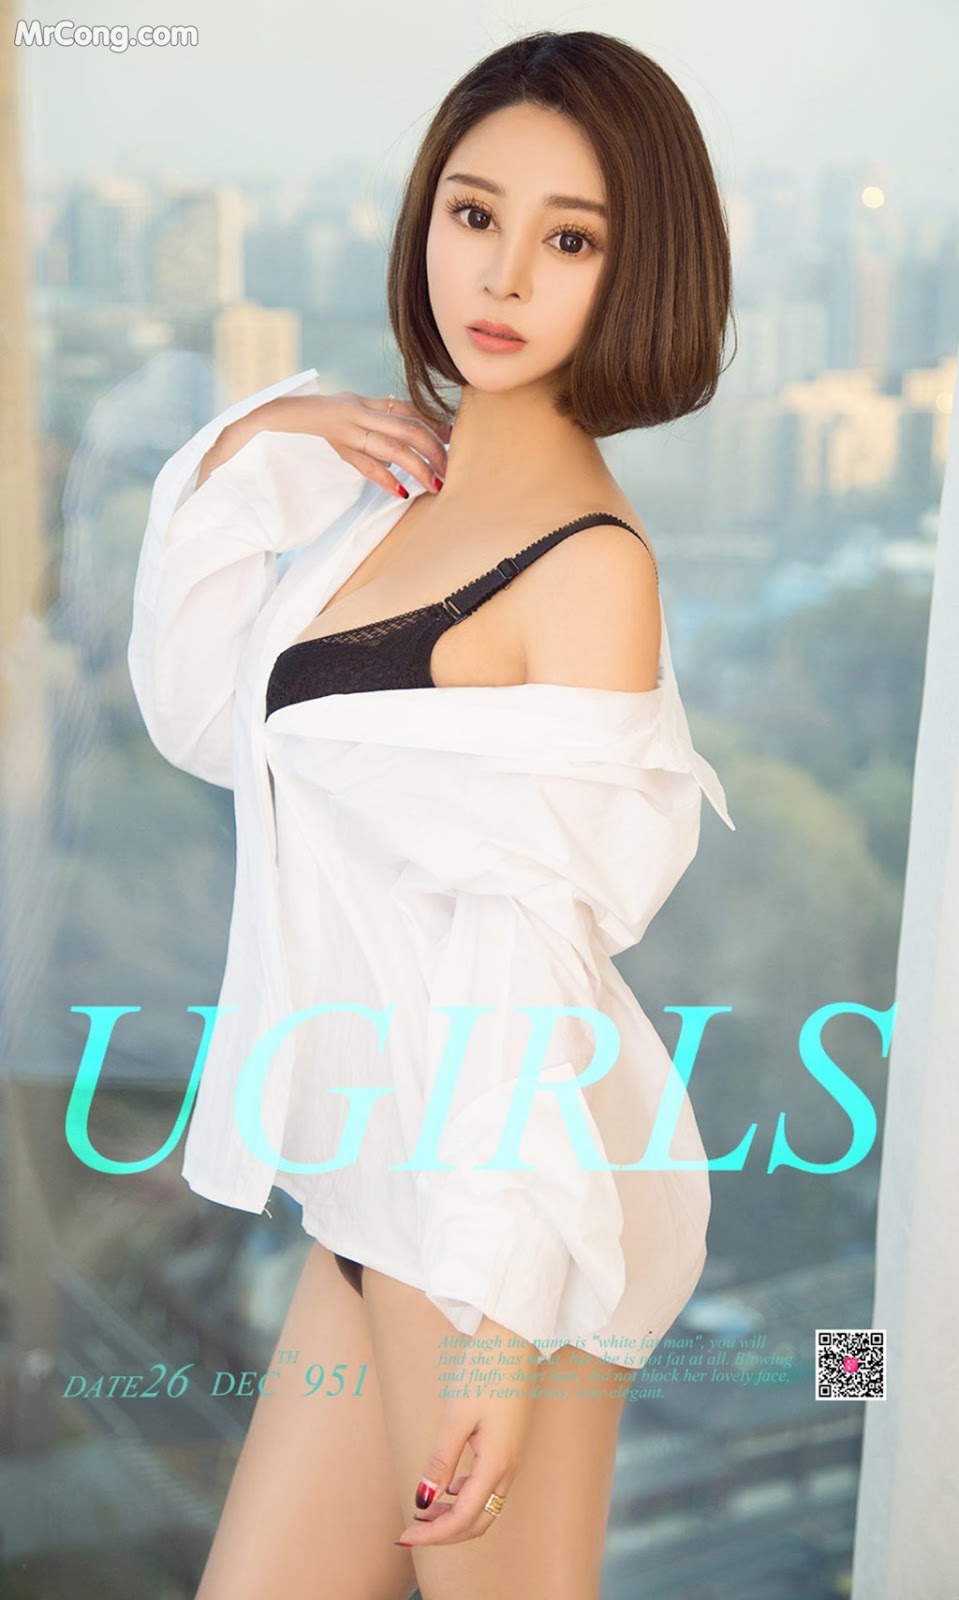 UGIRLS - Ai You Wu App No.951: Model Ding Dang (叮当) (40 photos)